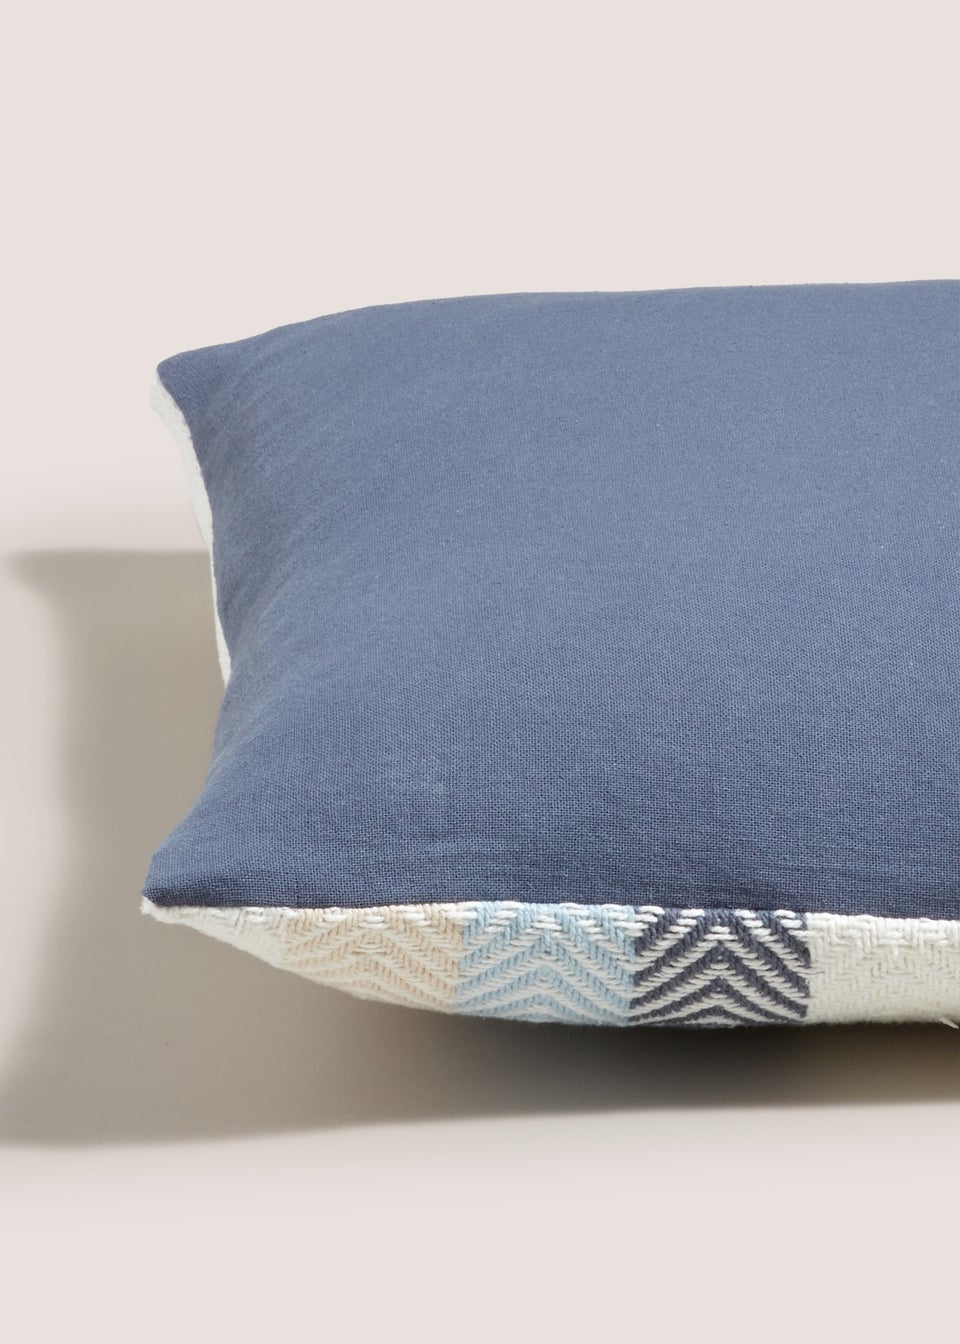 Indigo Stripe Woven Cushion (43cm x 43cm)